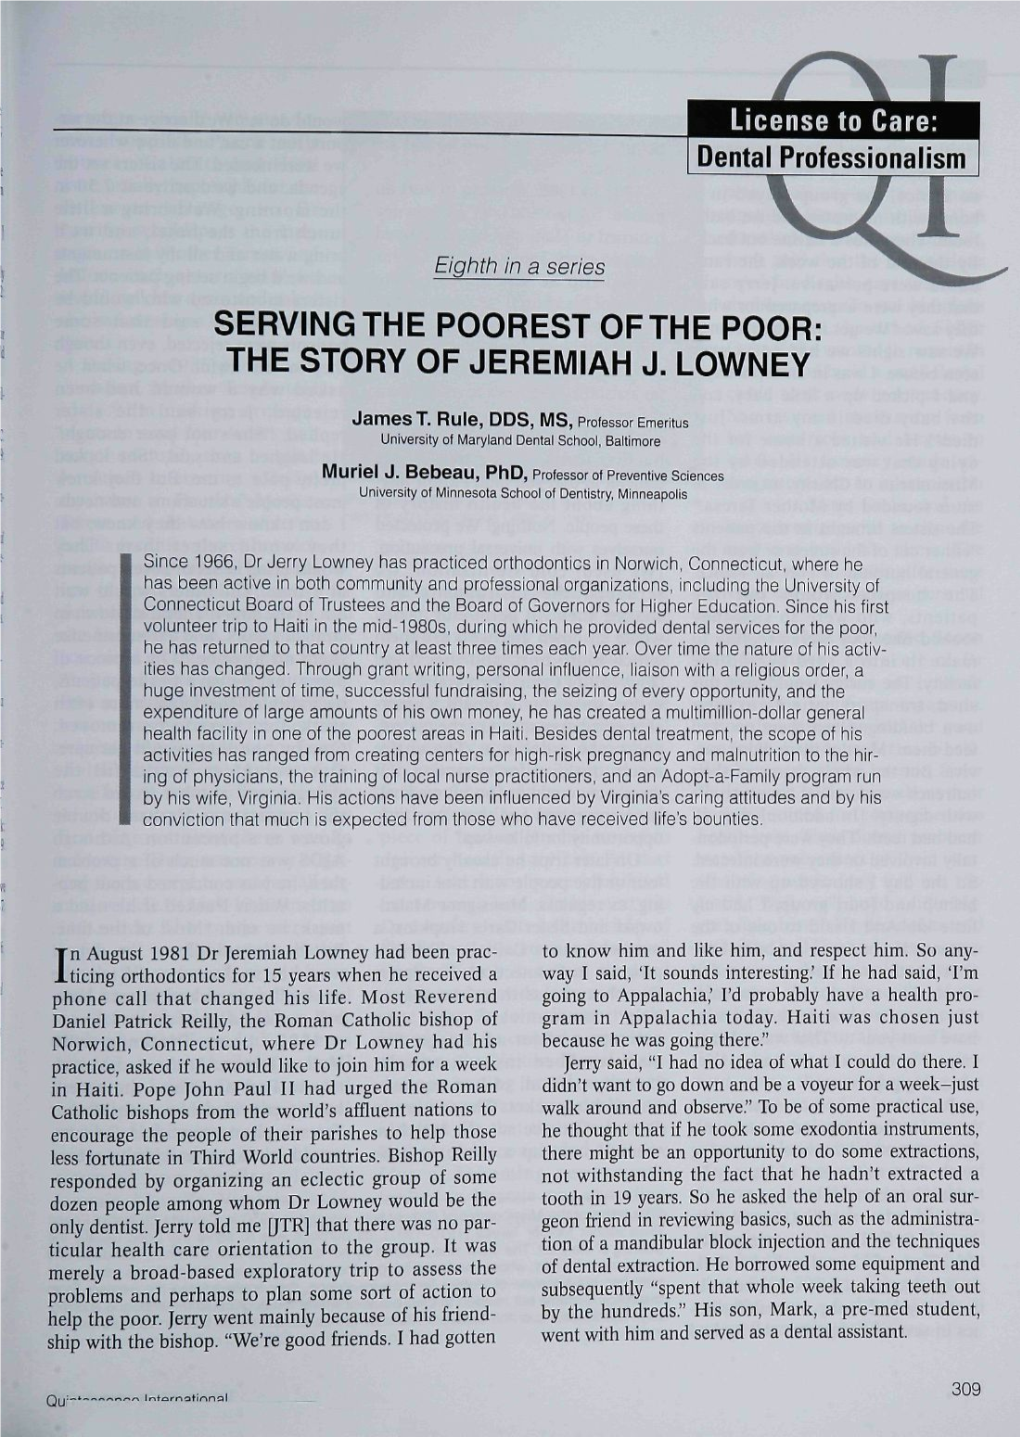 The Story of Jeremiah J. Lowney